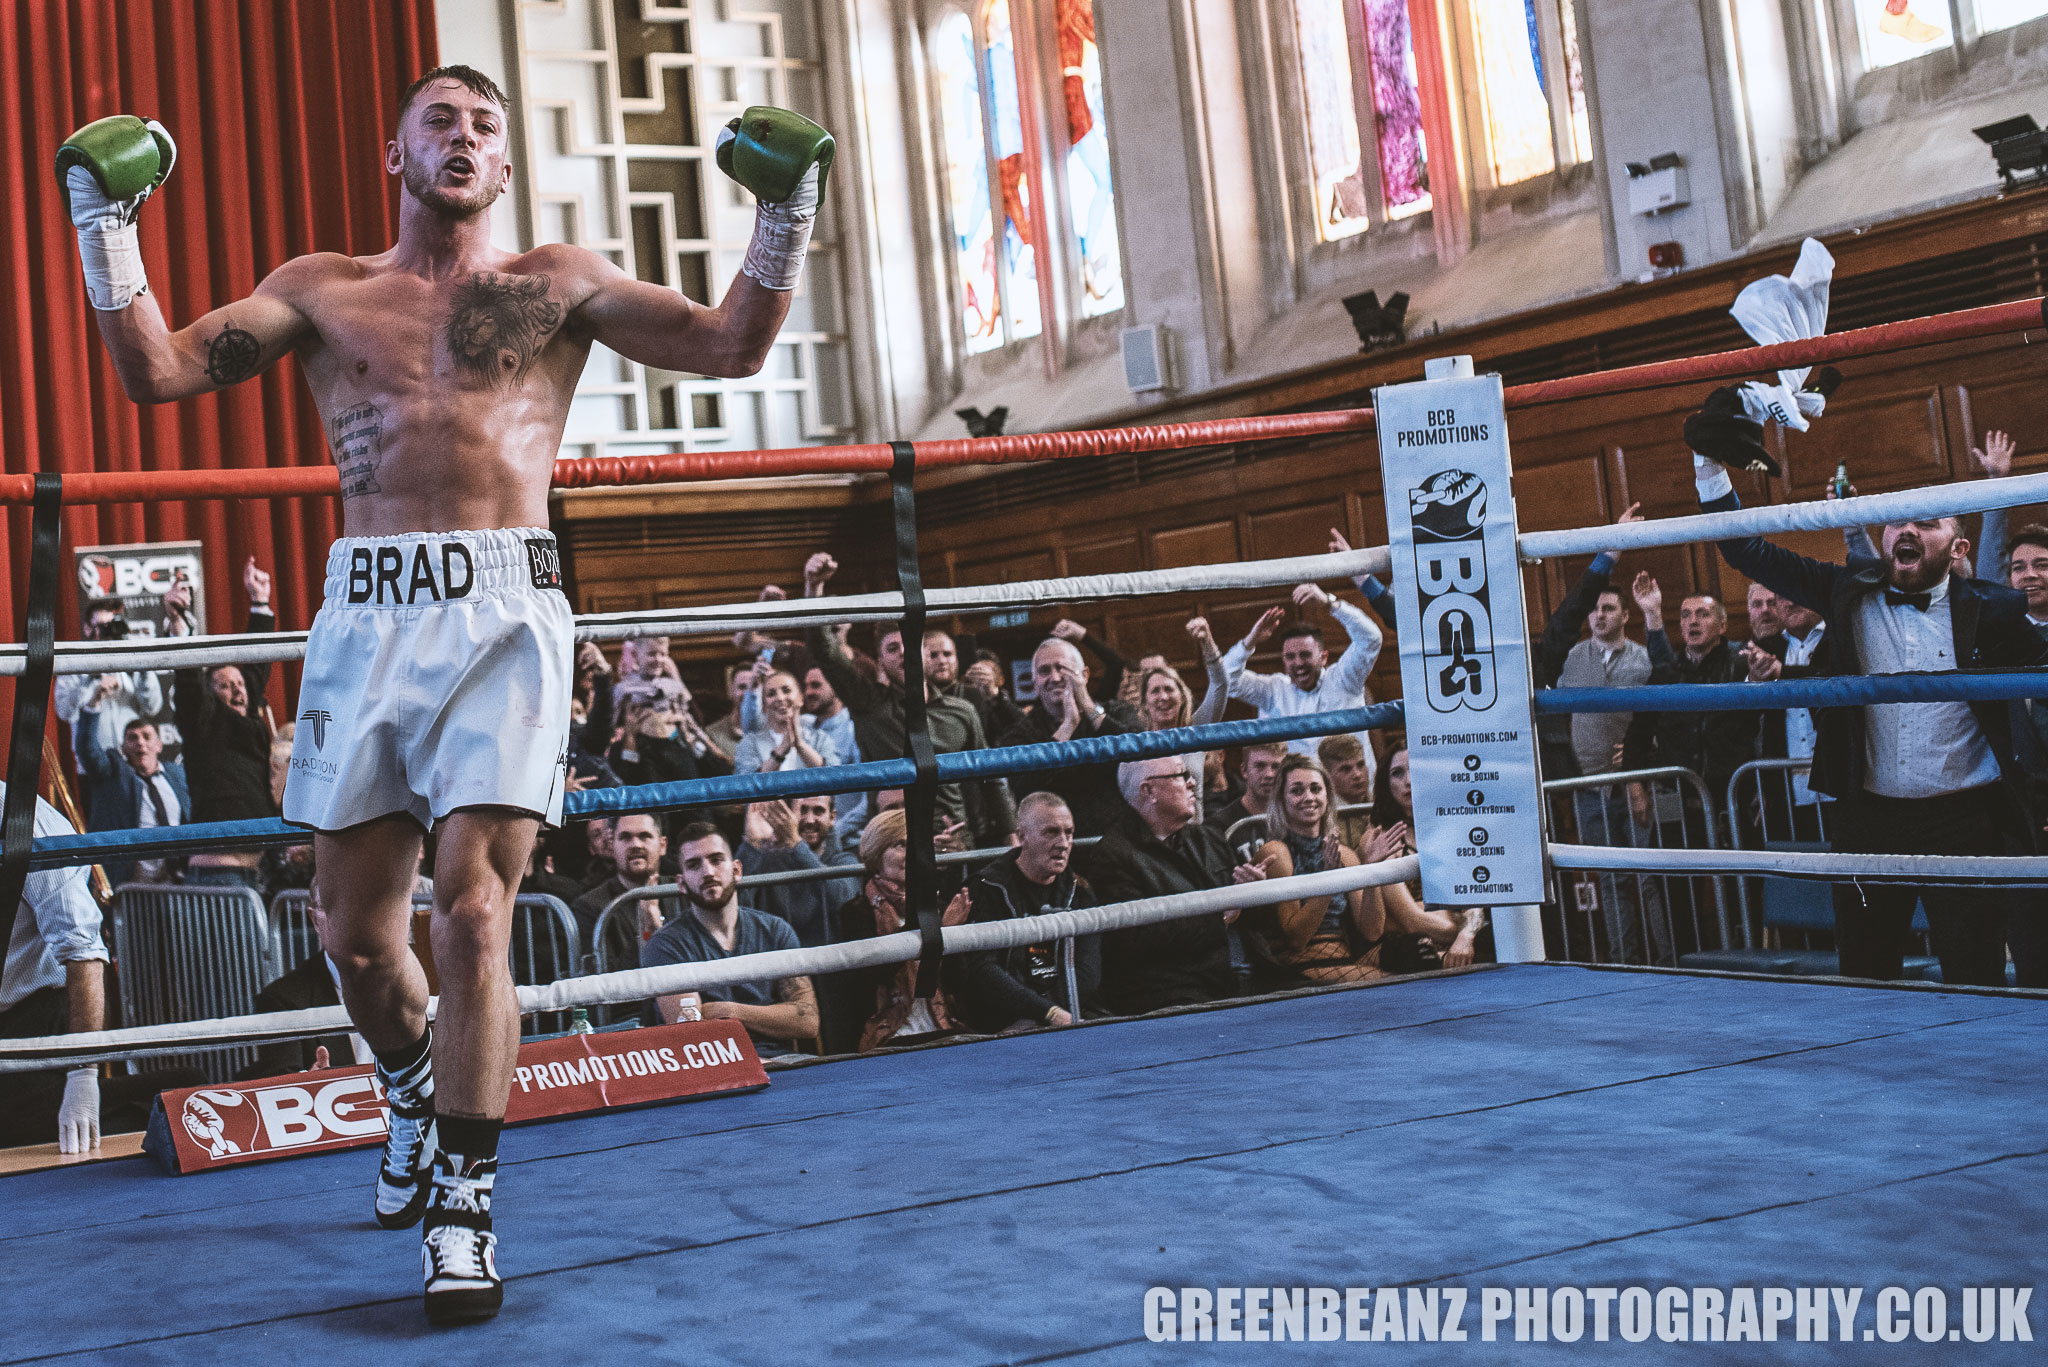 Brad Pauls UK boxing photos